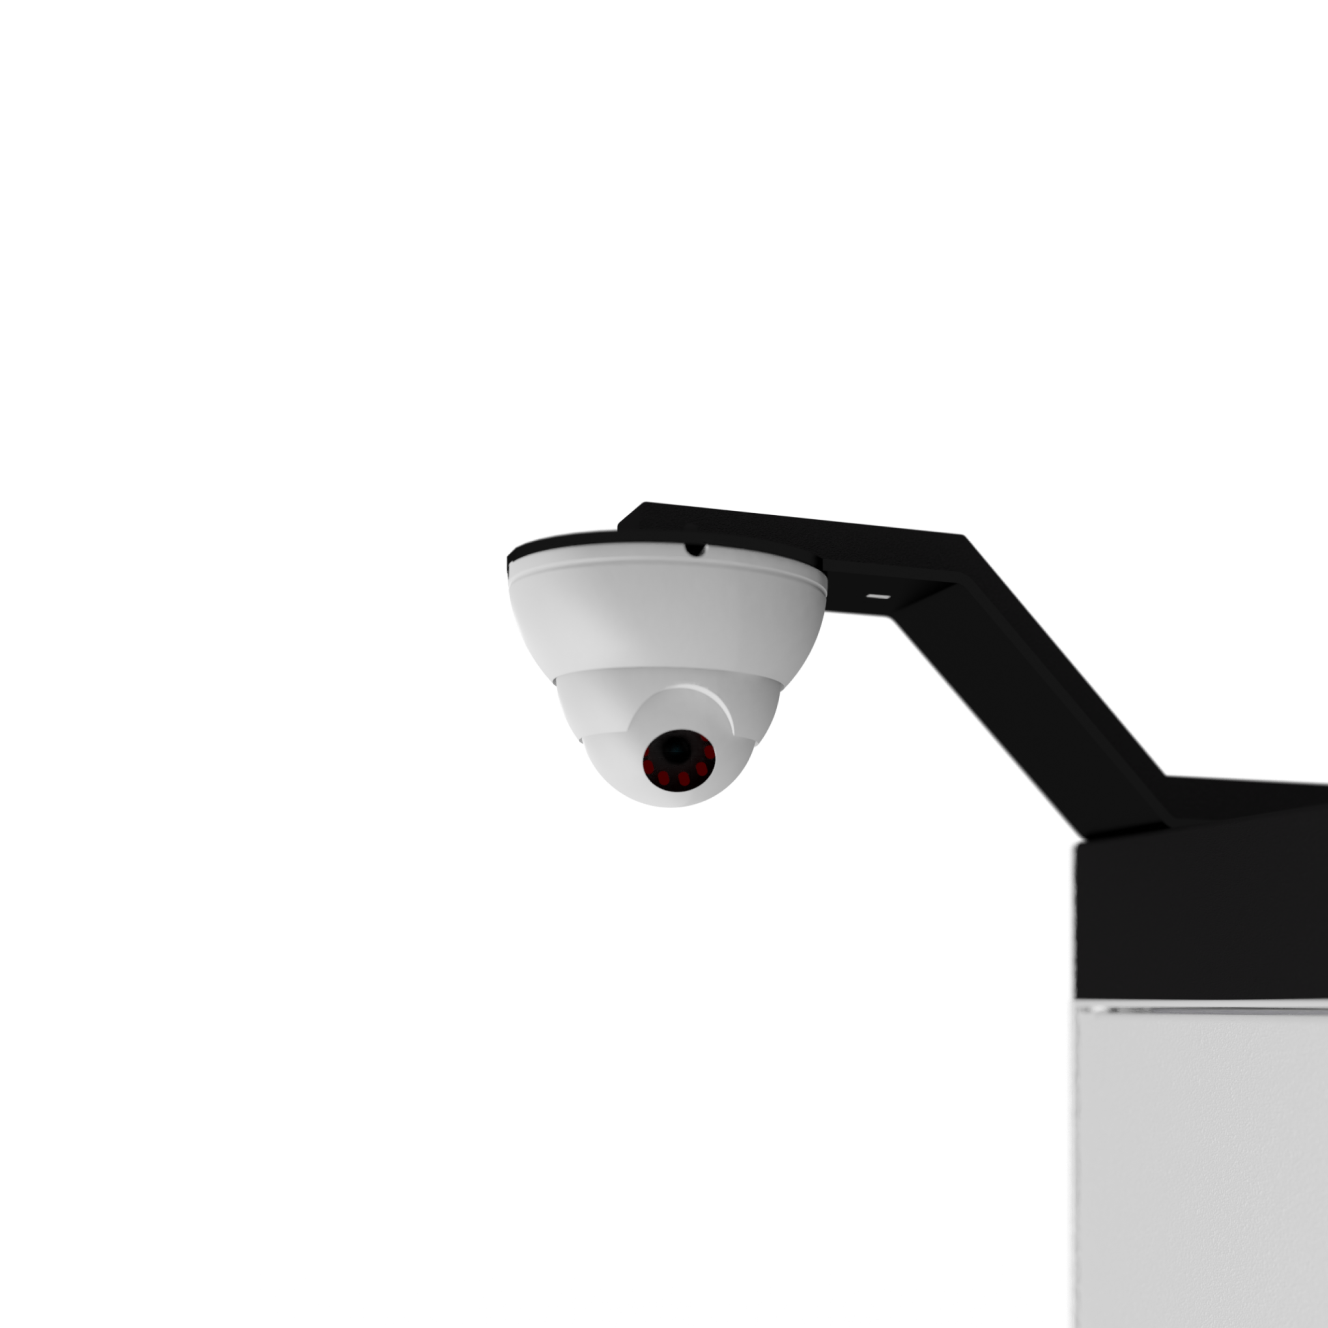 CCTV and biometrics